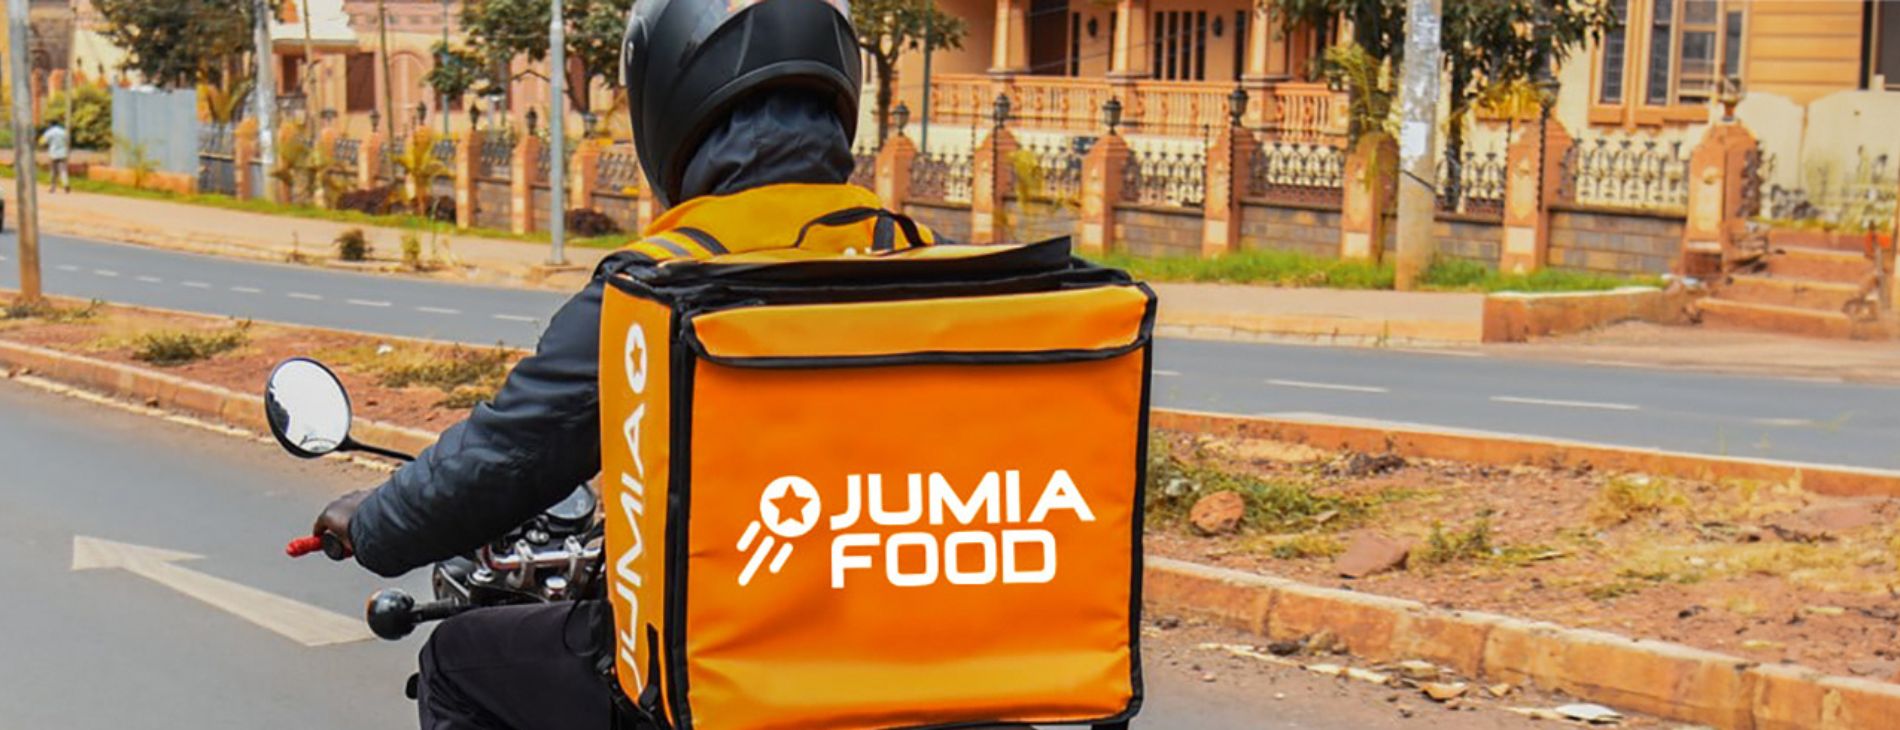 Jumia Food